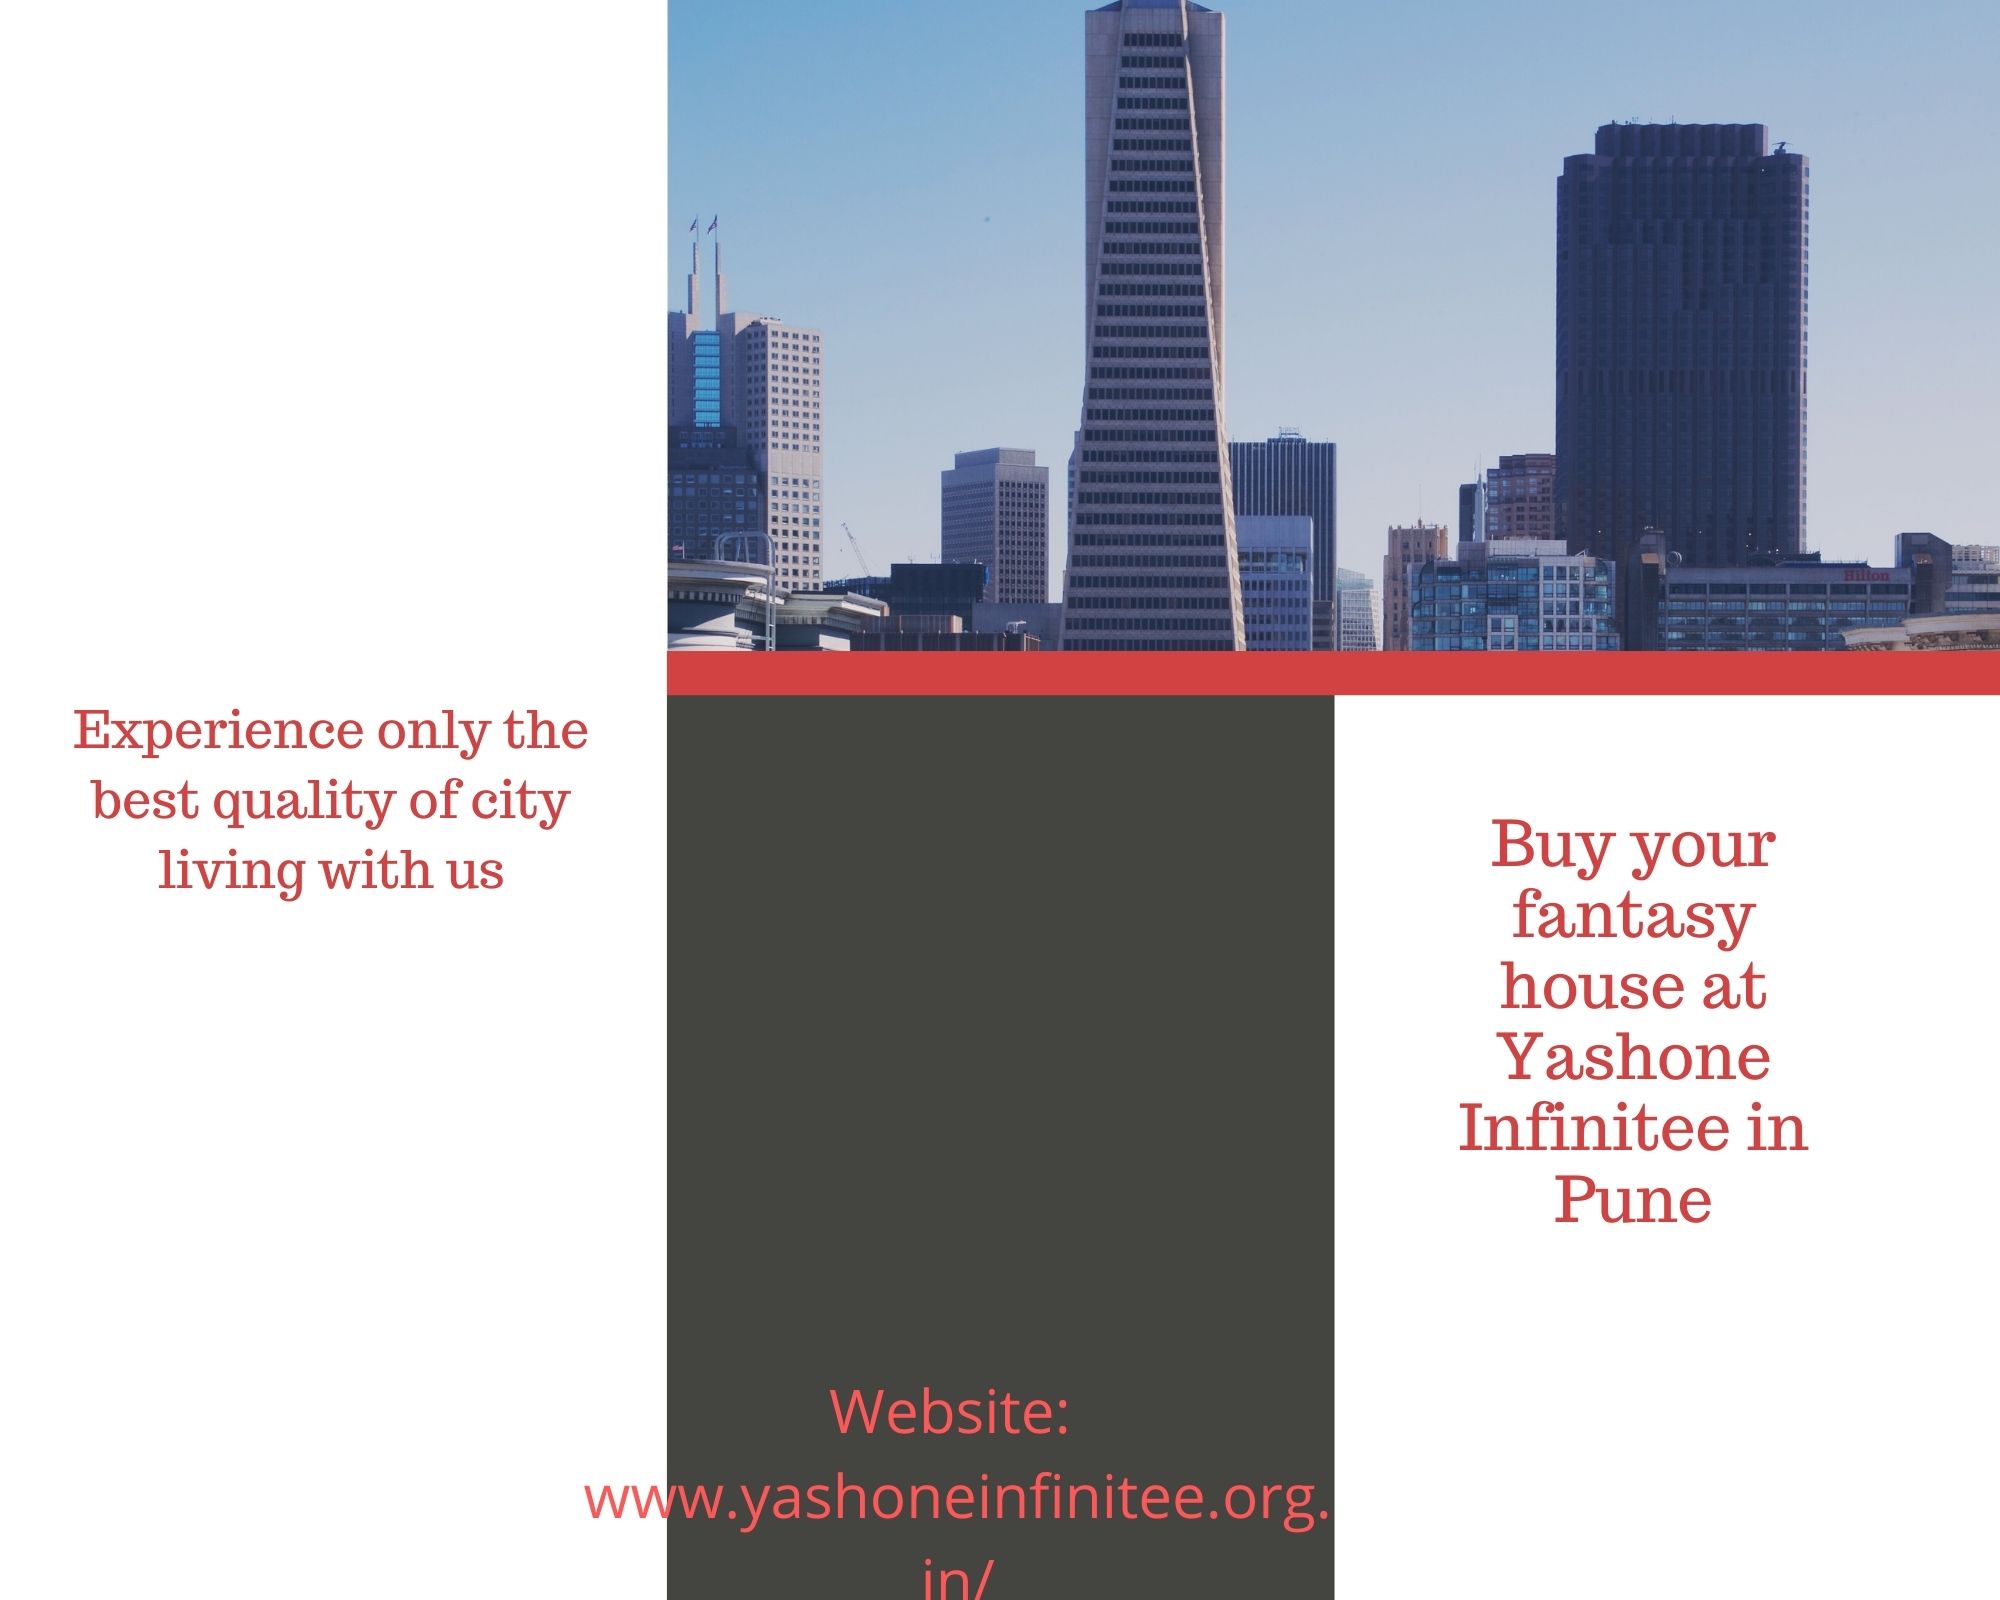 Buy your fantasy house at Yashone Infinitee in Pune